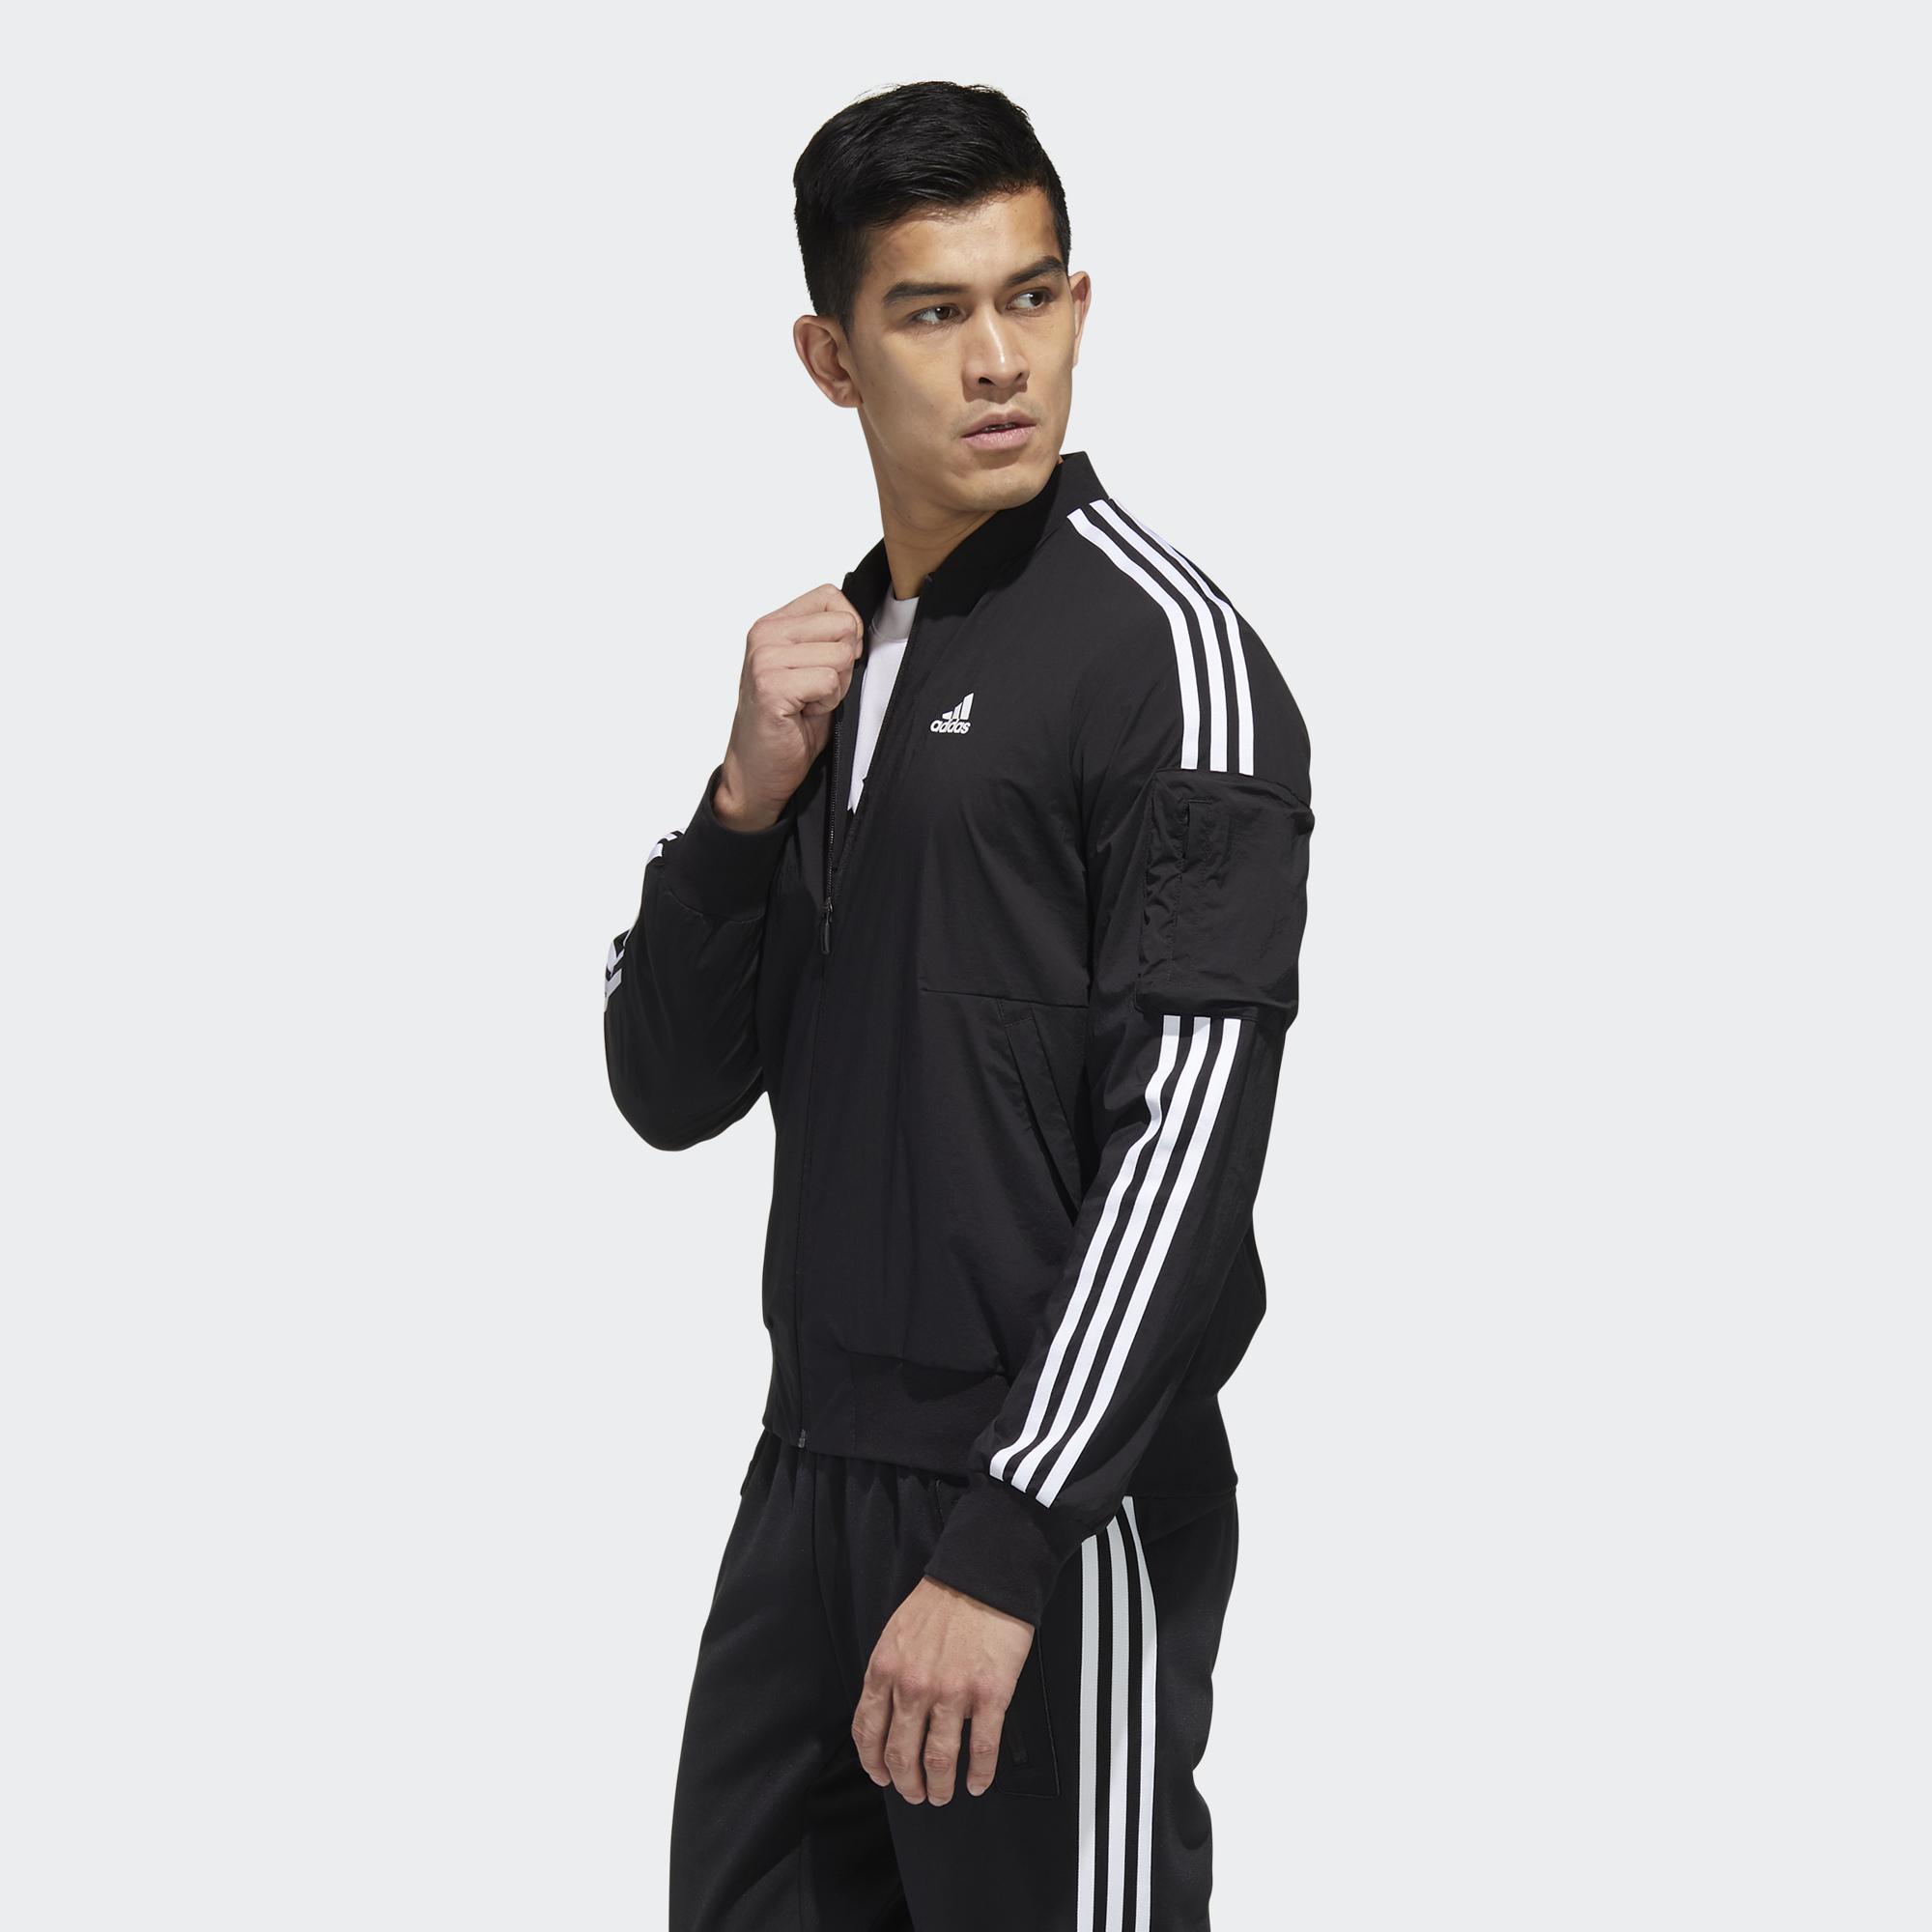 Adidas GH4802 Male CORE-NEO training 3-STRIPES sports jacket size M1